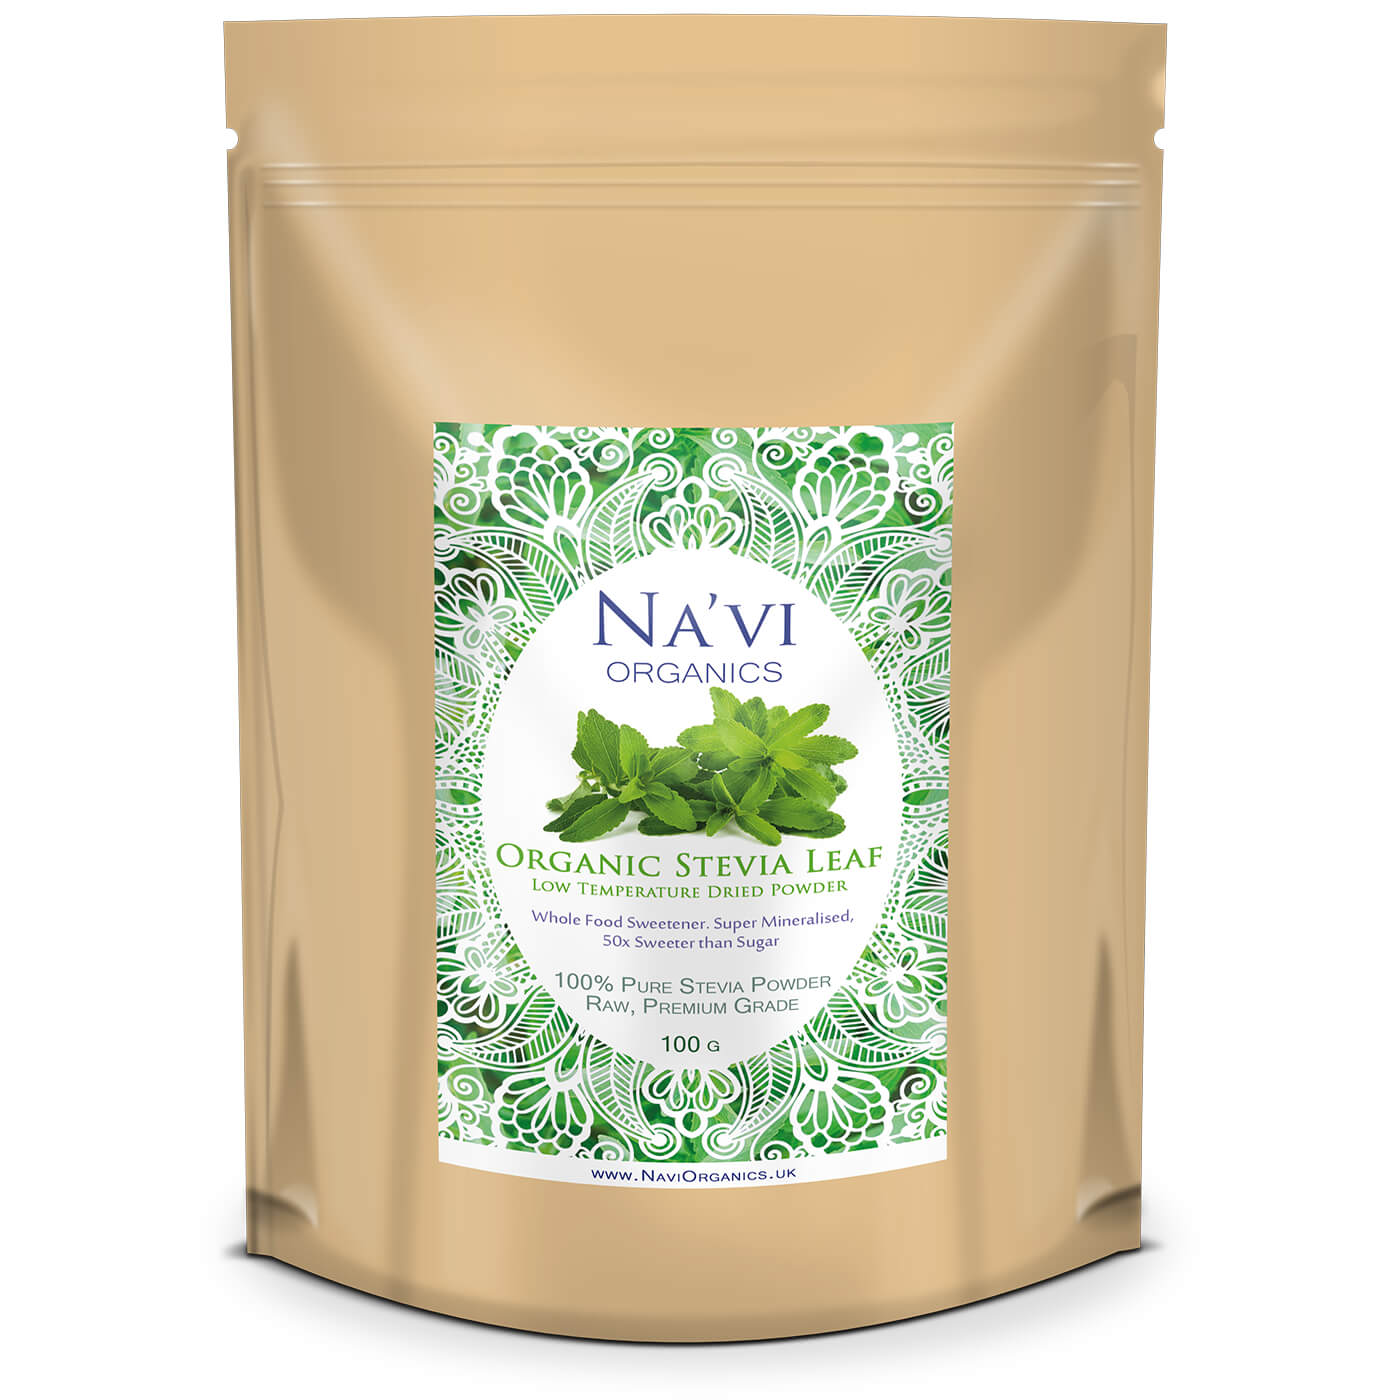 Organic Stevia Rebaudiana Raw Leaf Powder